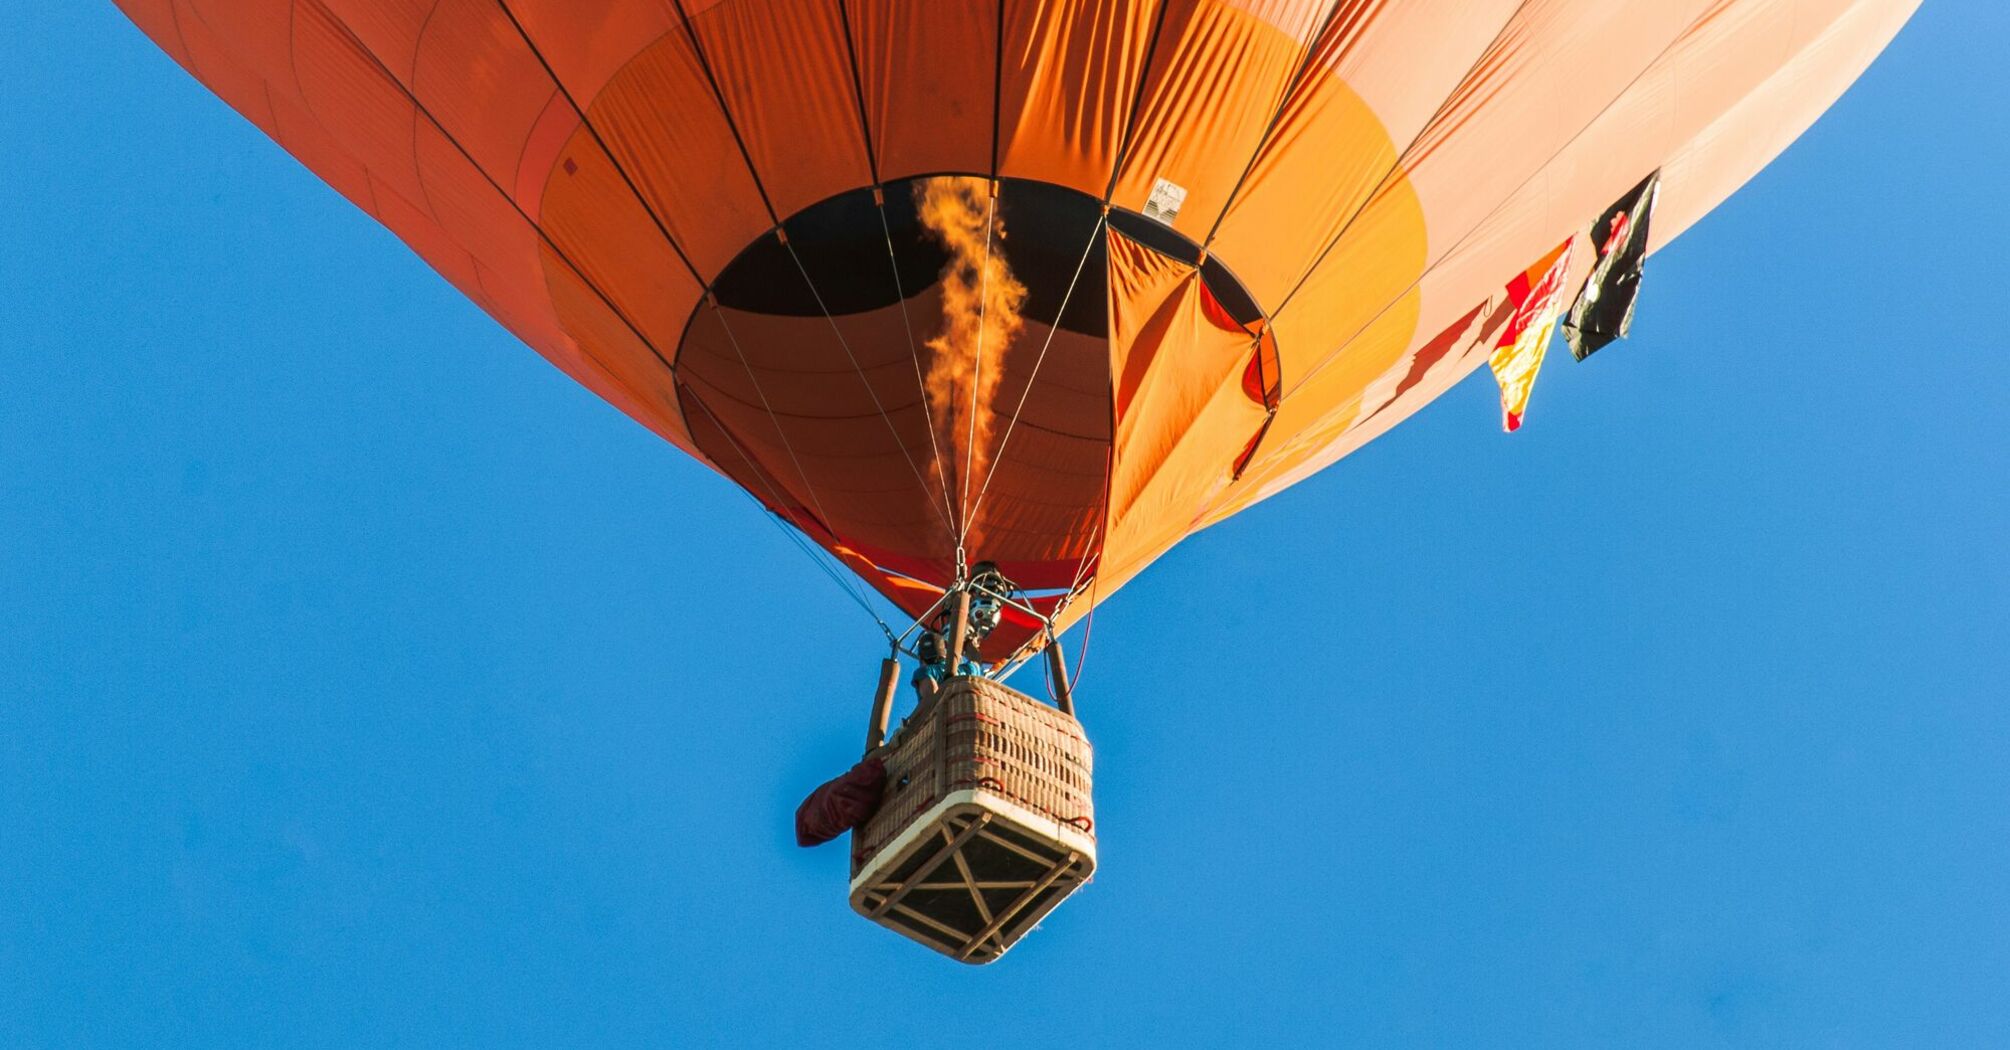 person riding a orange hot air balloon